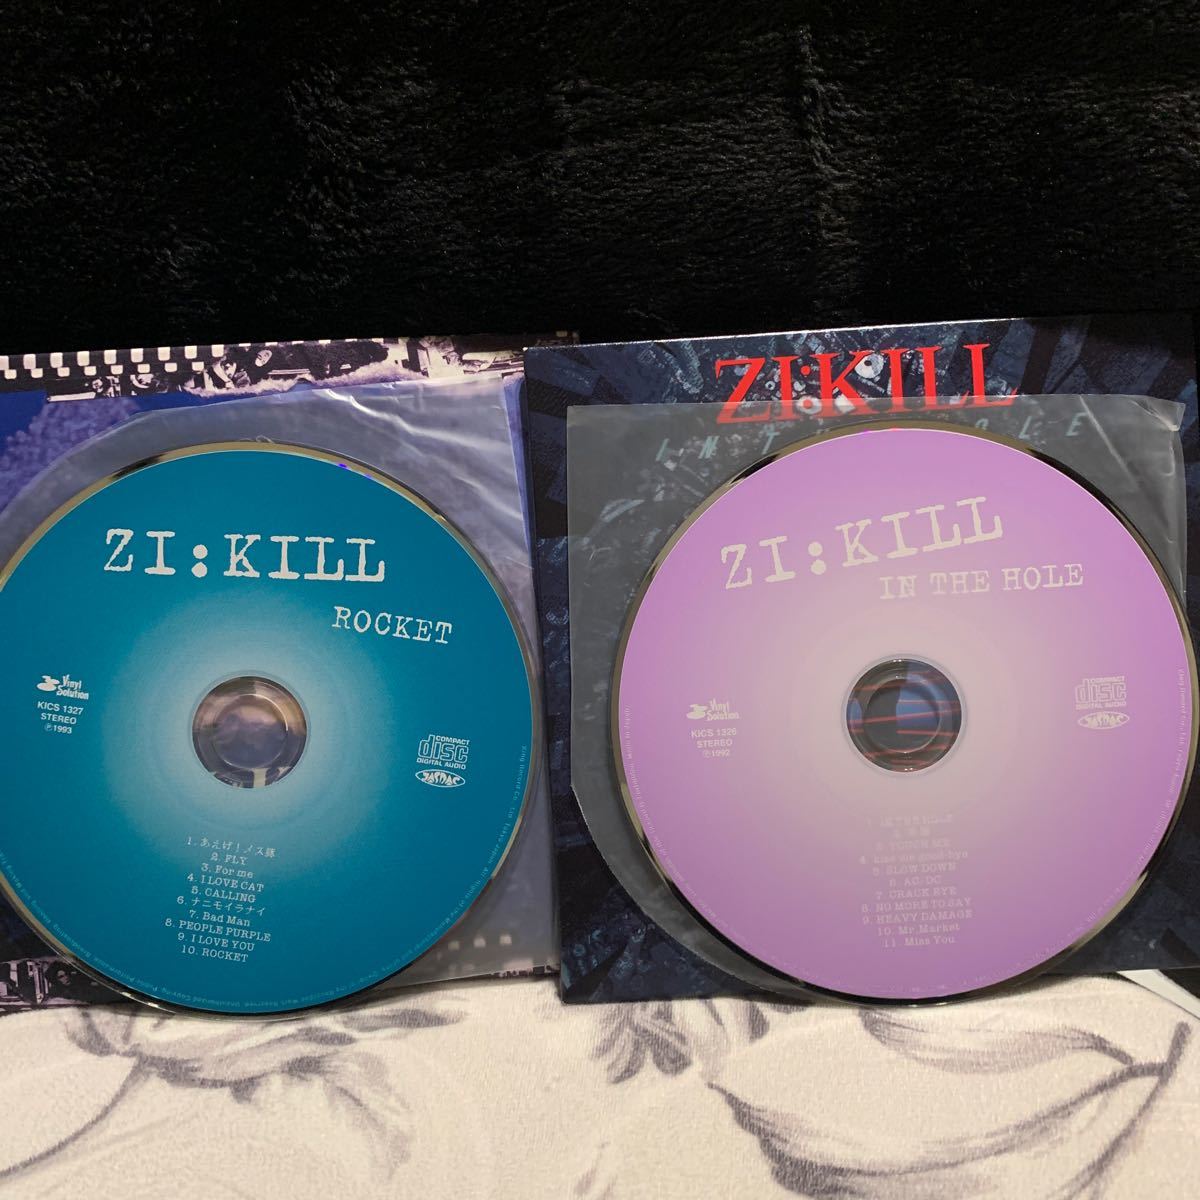 ZI:KILL/ повторный departure бумага jacket CD/IN THE HOLE + ROCKET/TUSK/ji cut /SLUTBANKS/vez